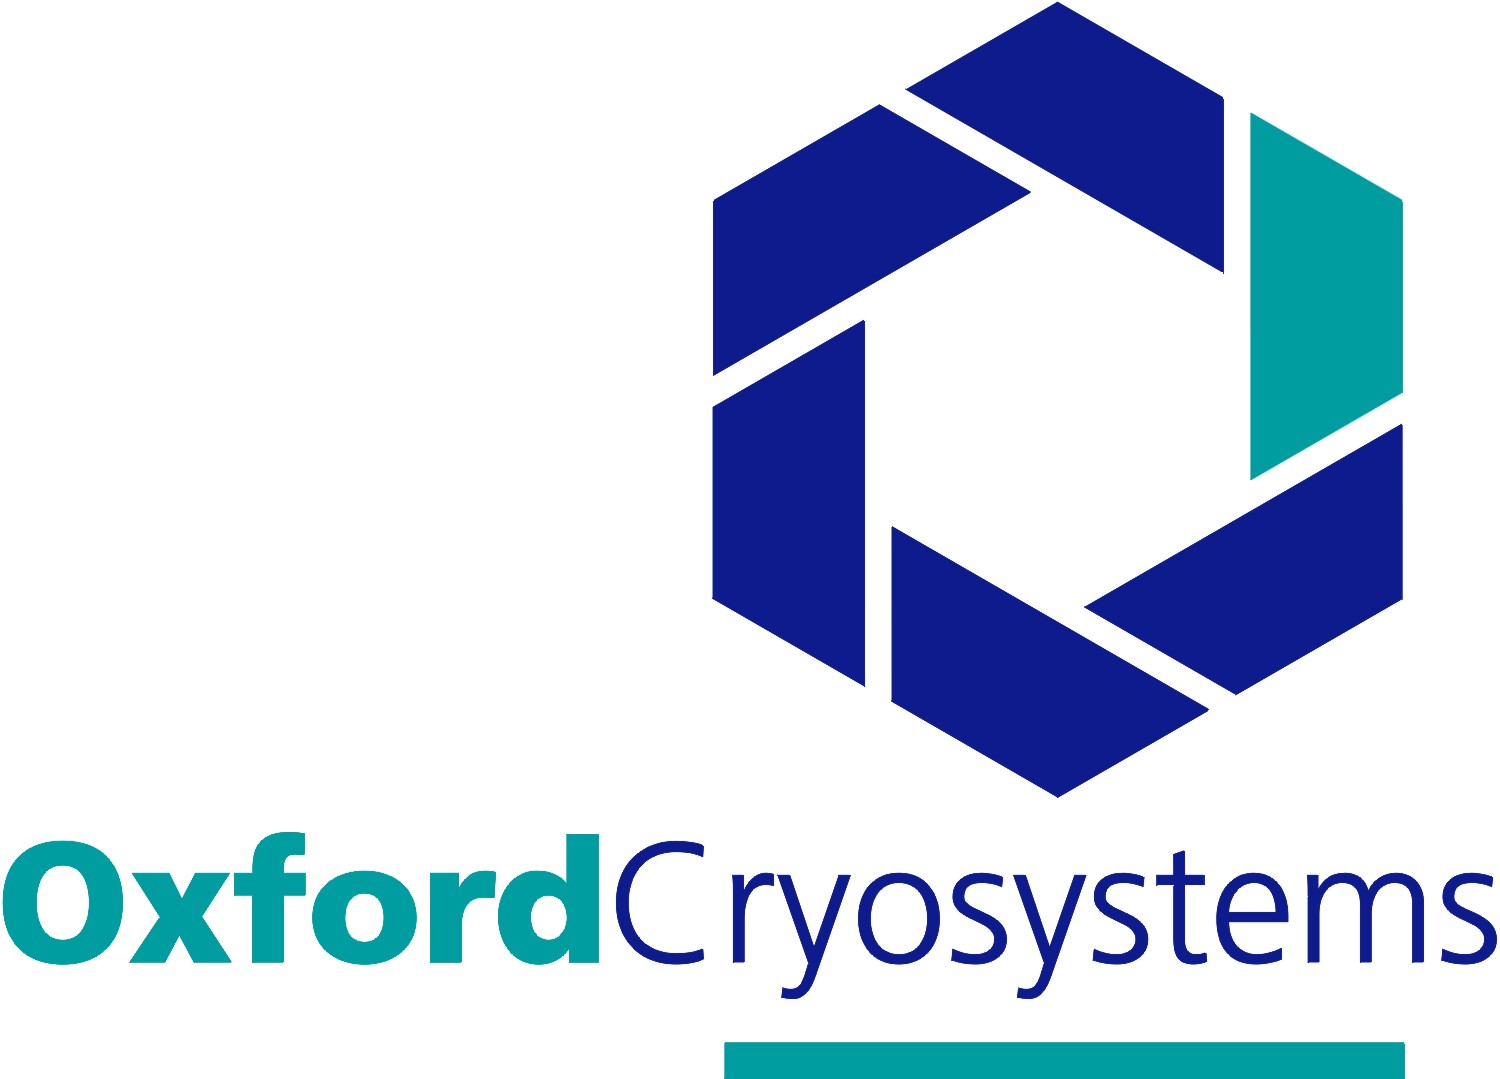 Oxford Cryosystems logo